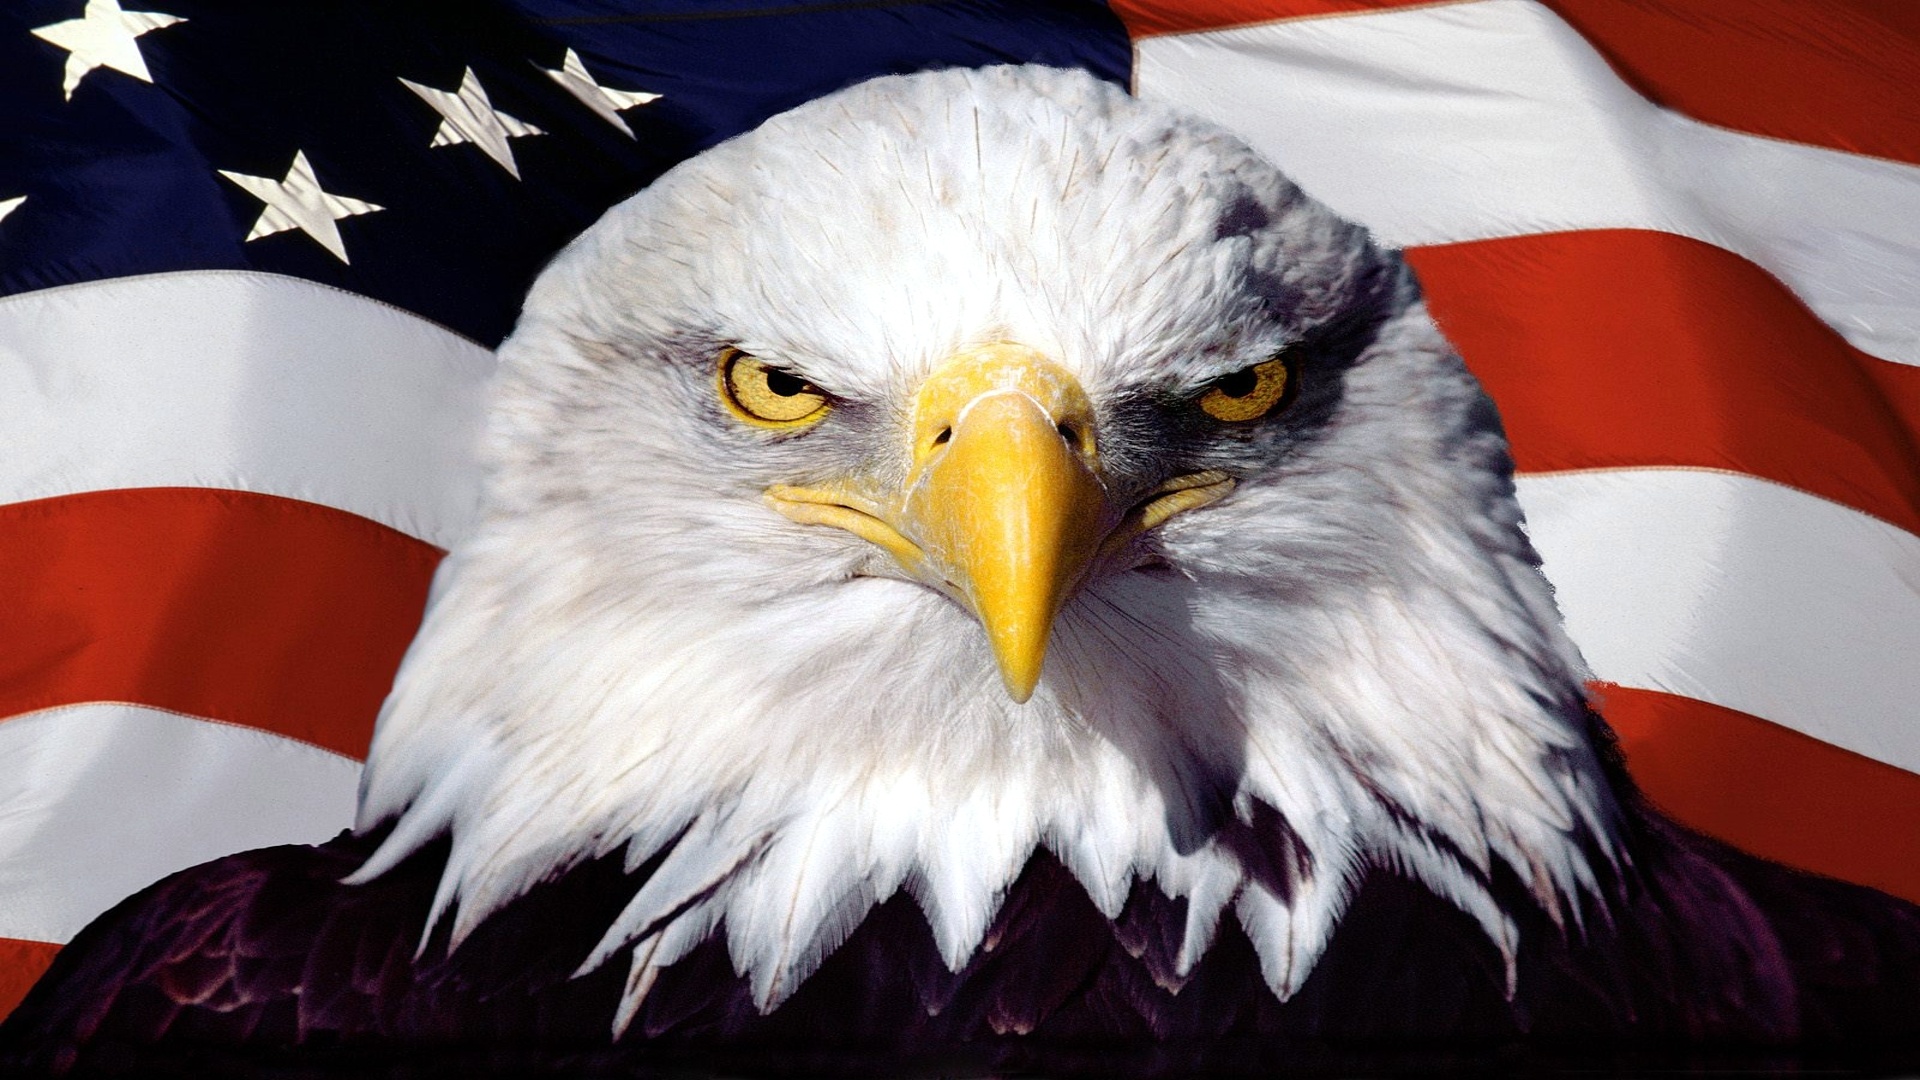 49+] American Flag with Eagle Wallpaper - WallpaperSafari